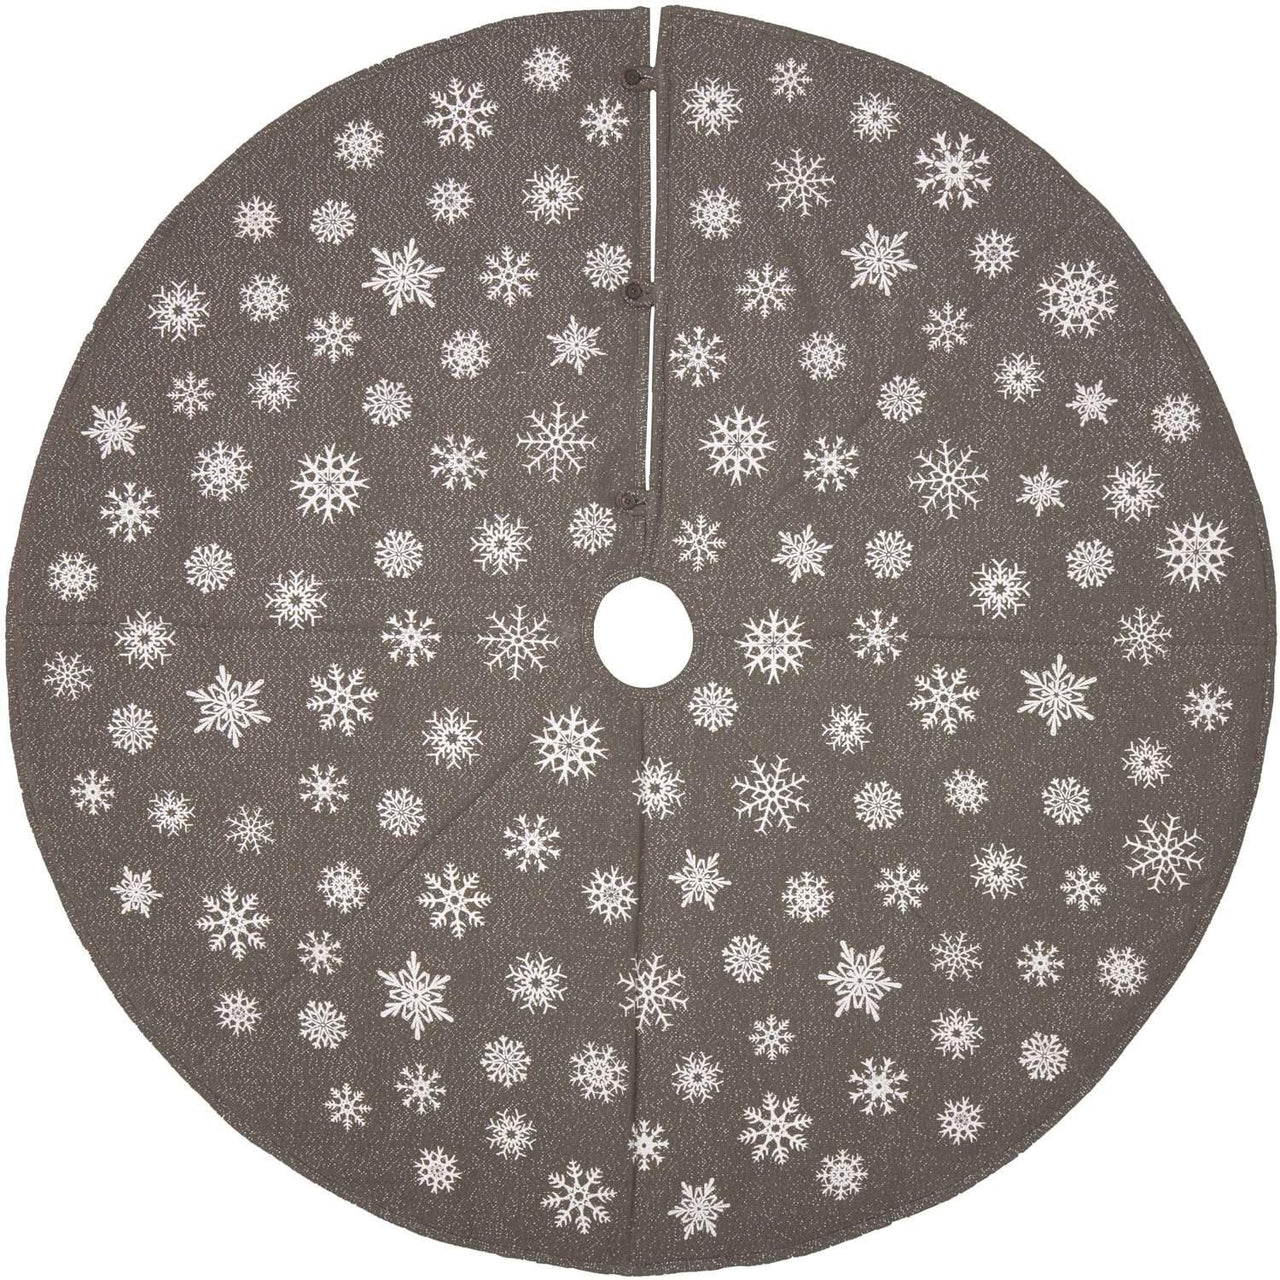 Snowflake Burlap Grey Christmas Tree Skirt 60 VHC Brands - The Fox Decor